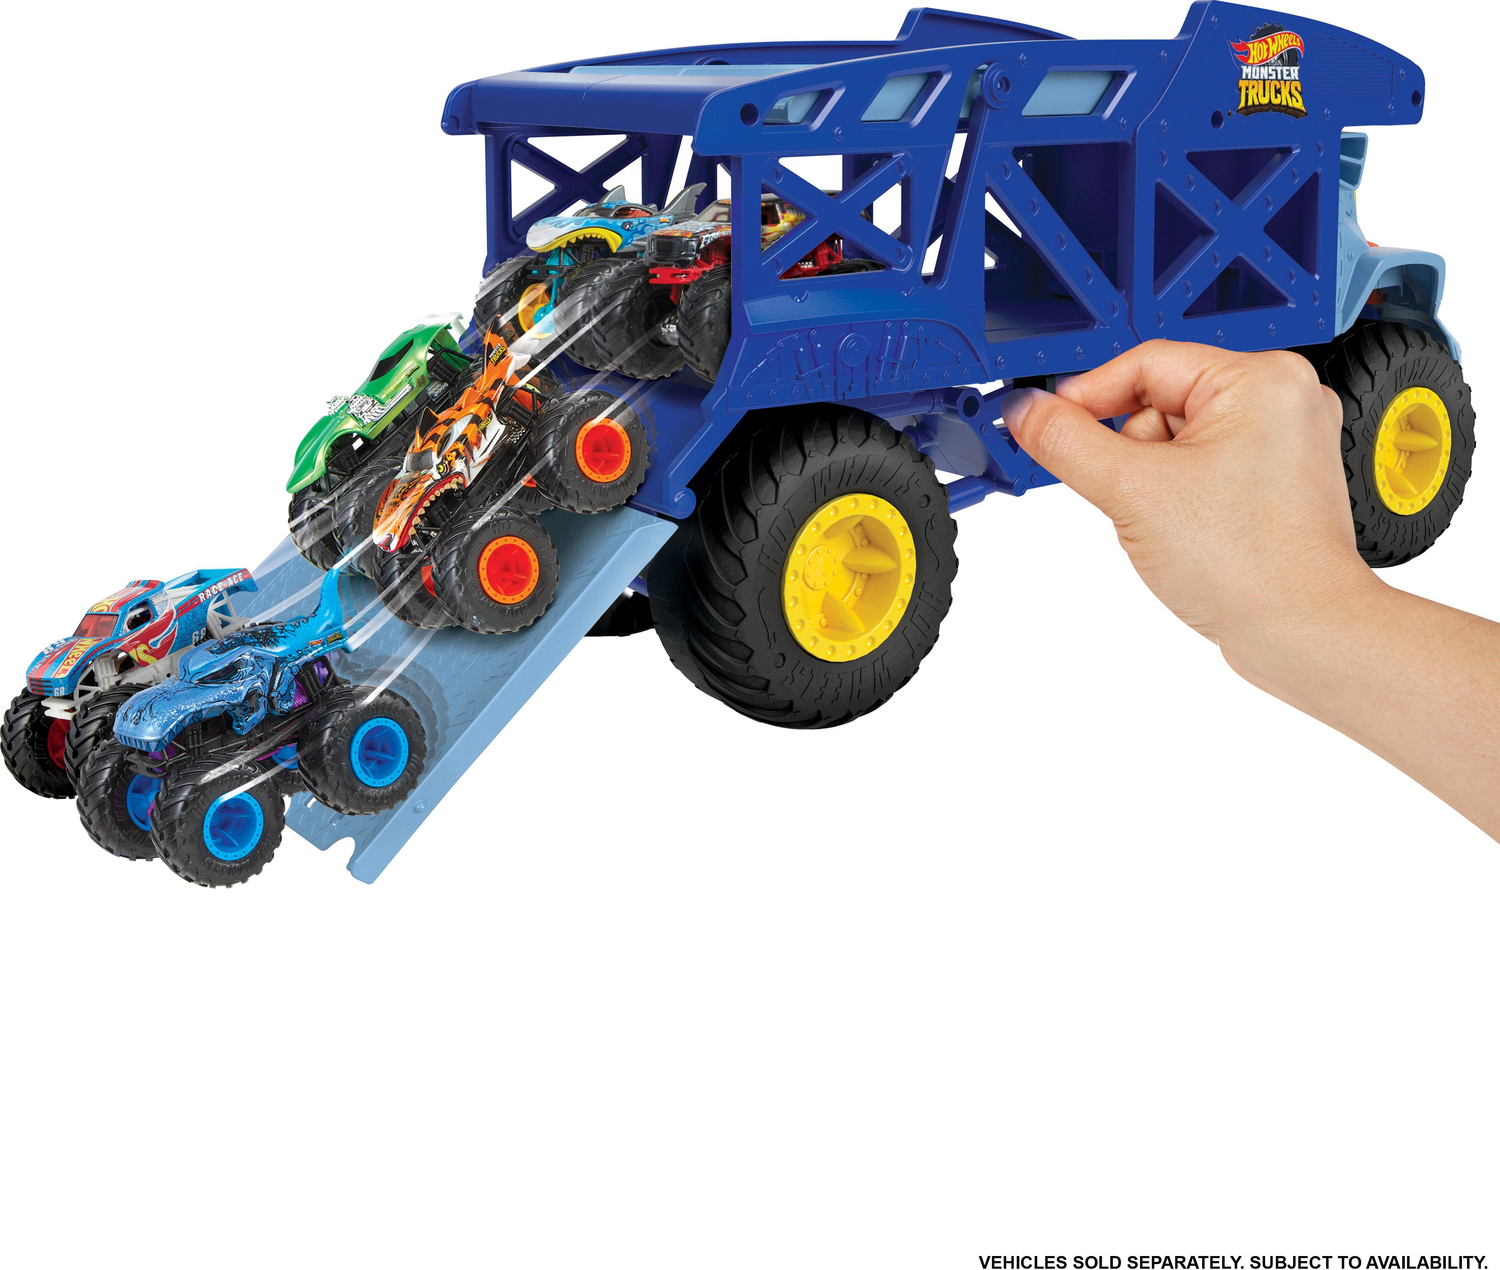 Hot Wheels Monster Trucks toy vehicle